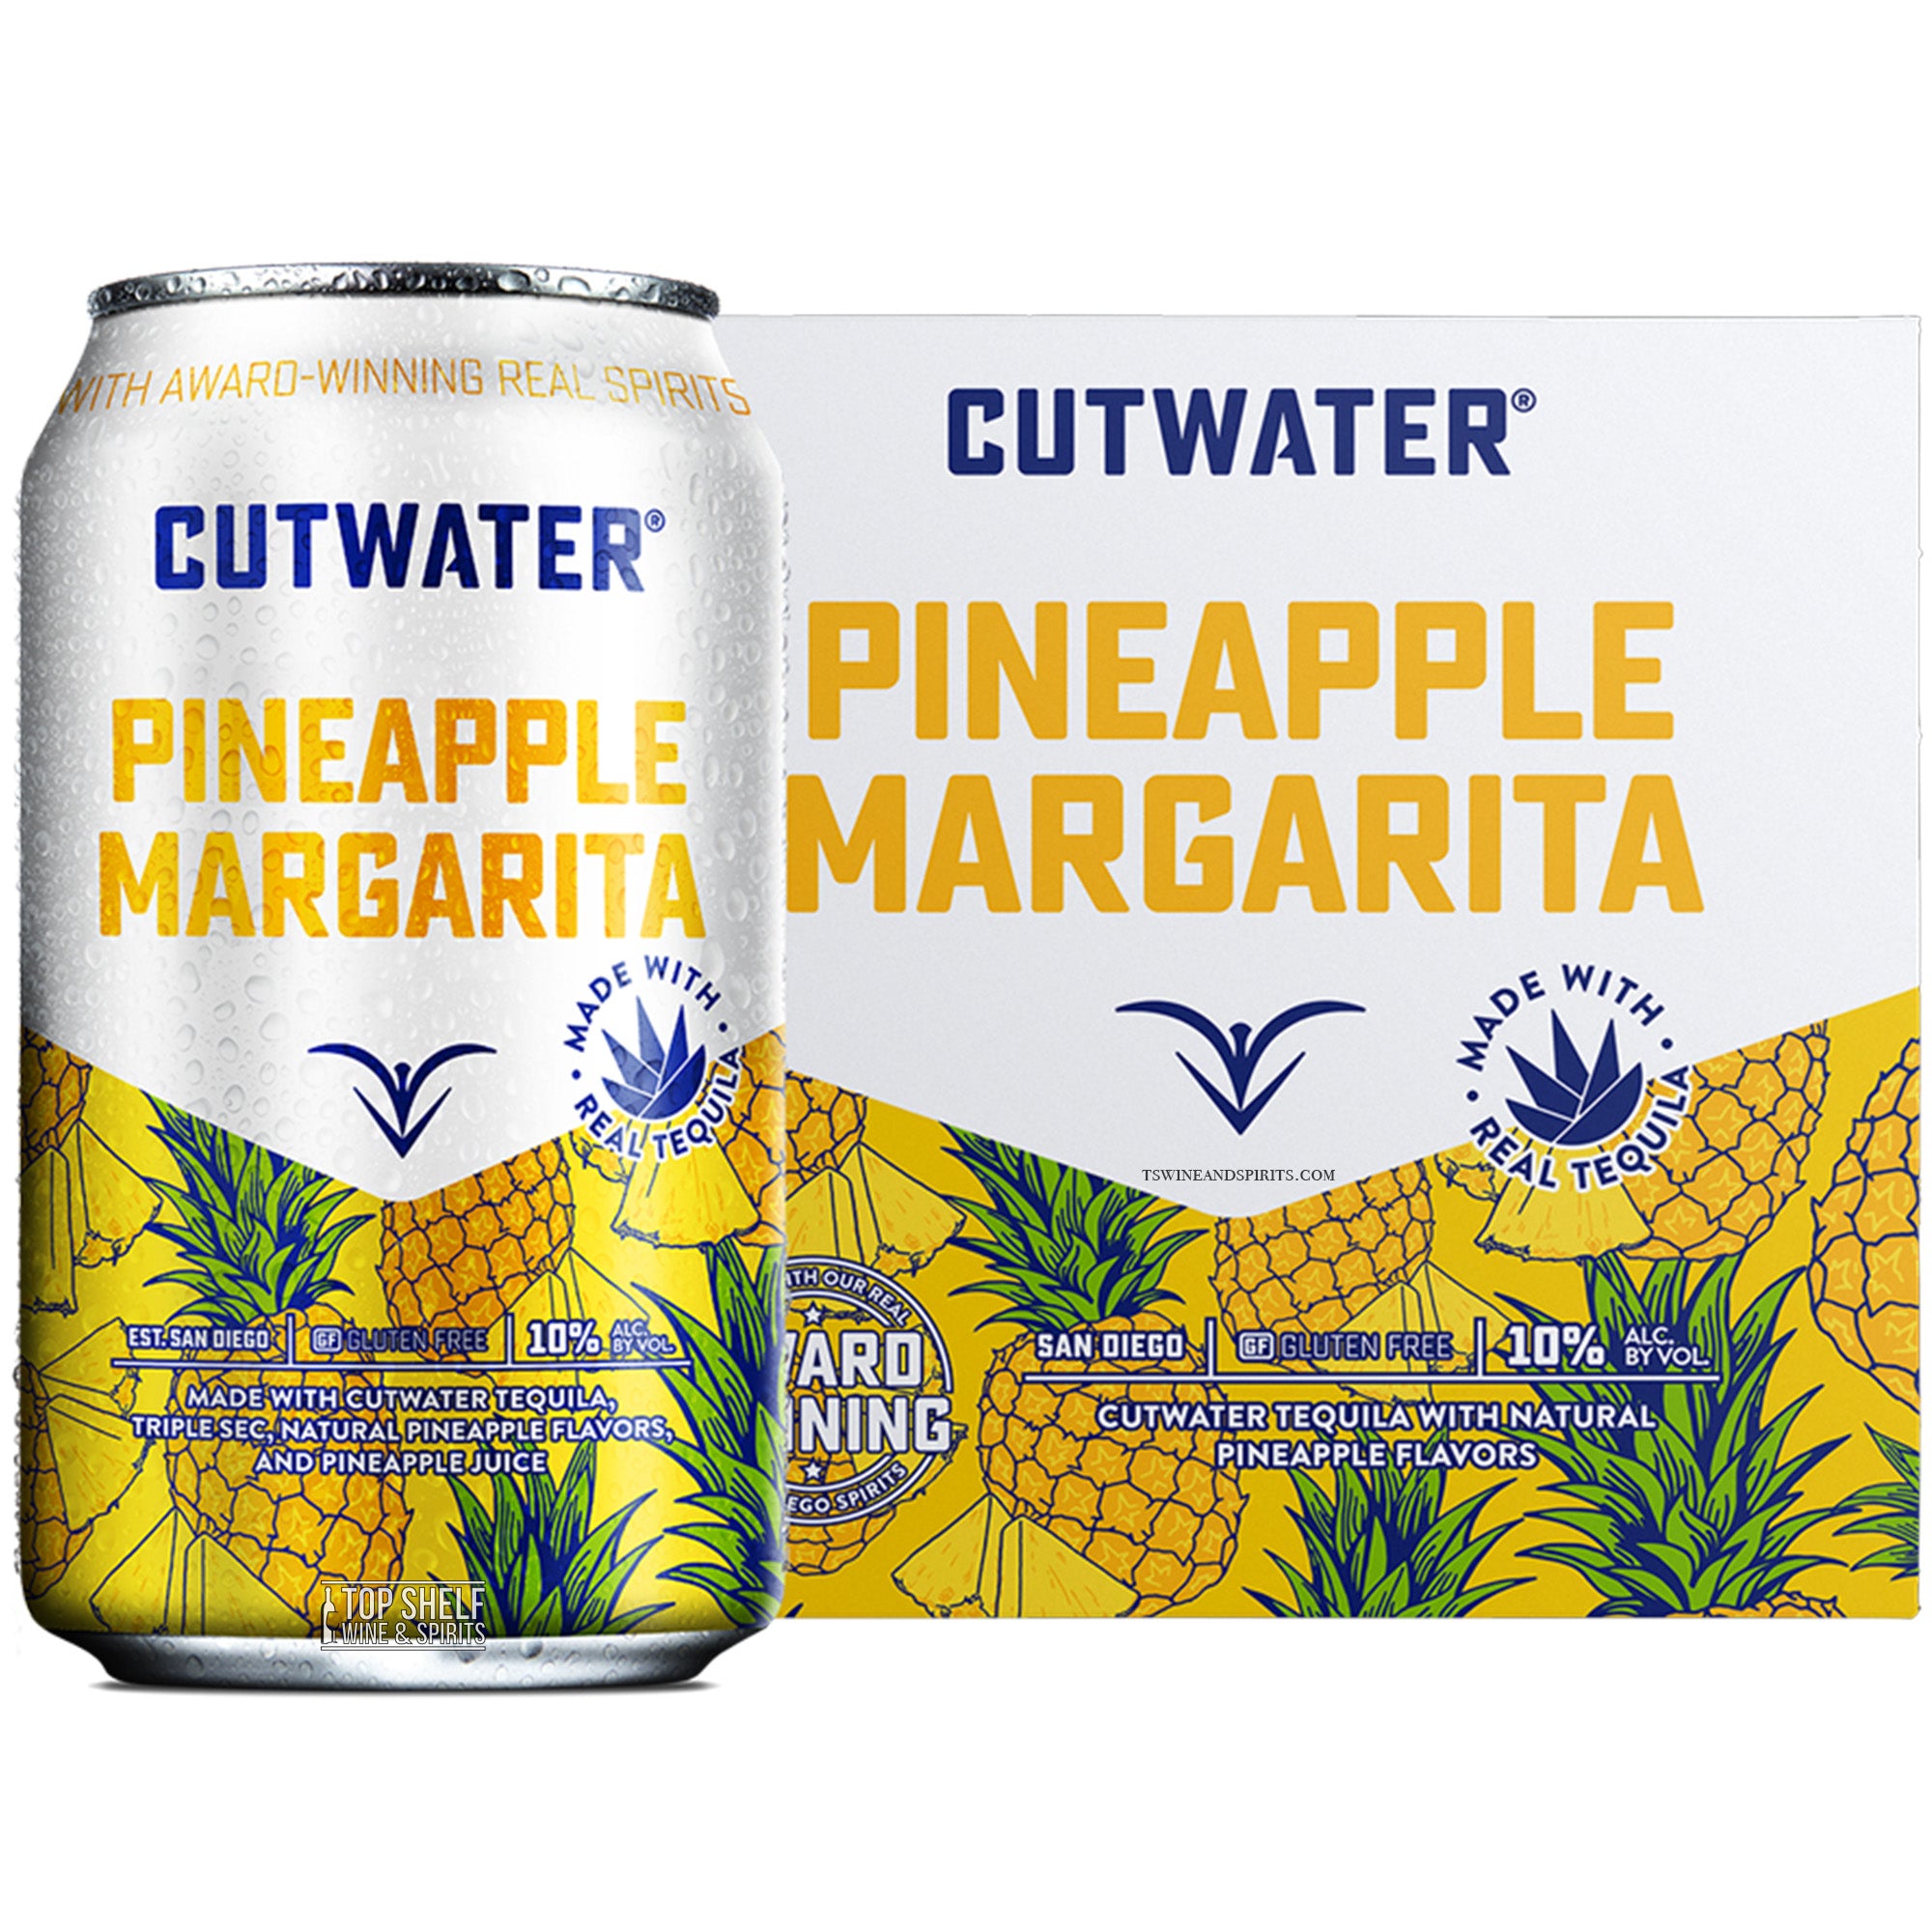 Cutwater Pineapple Margarita 4 pack